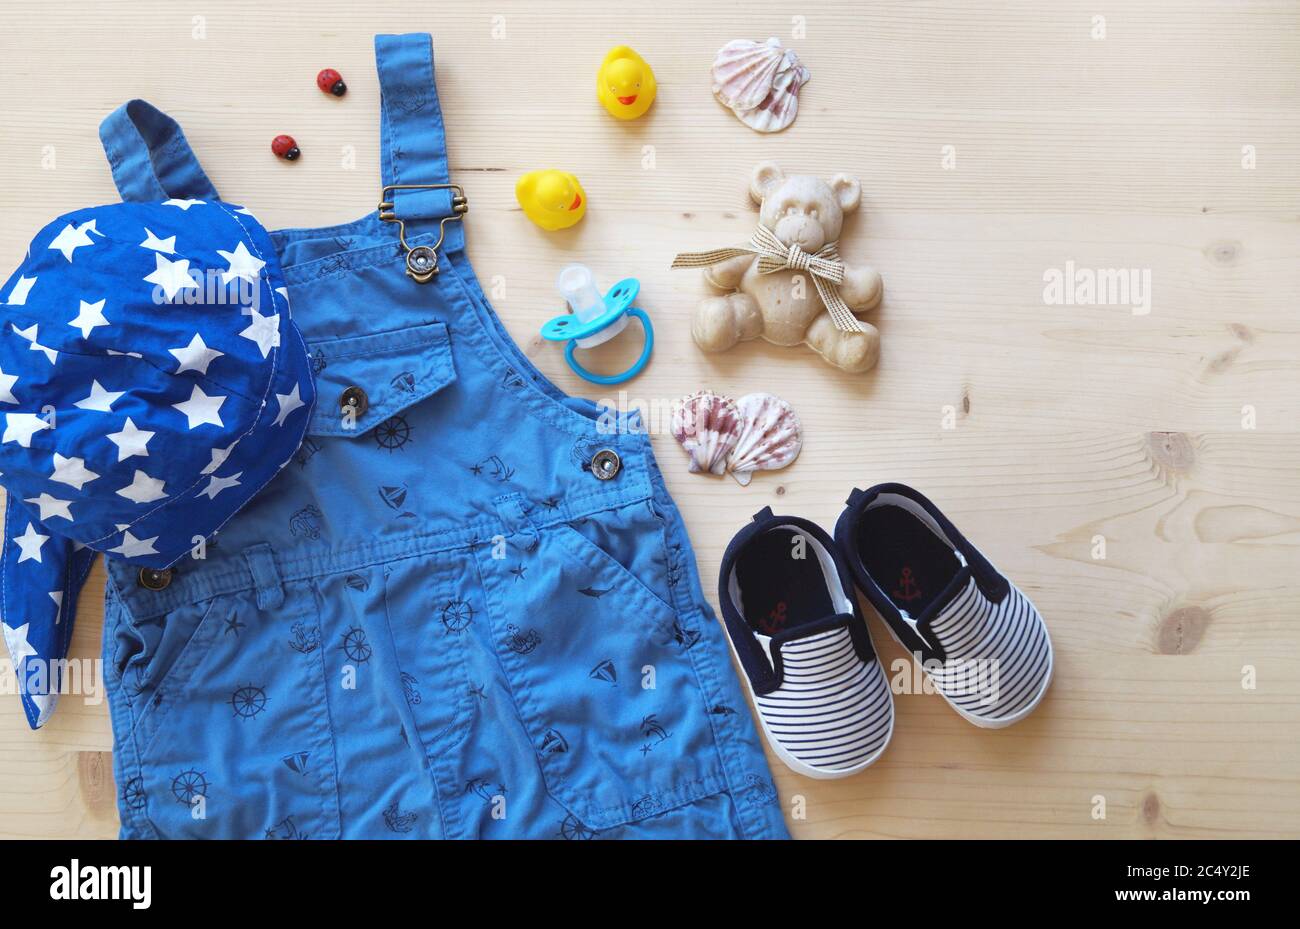 Summer baby boy Stock Photo - Alamy